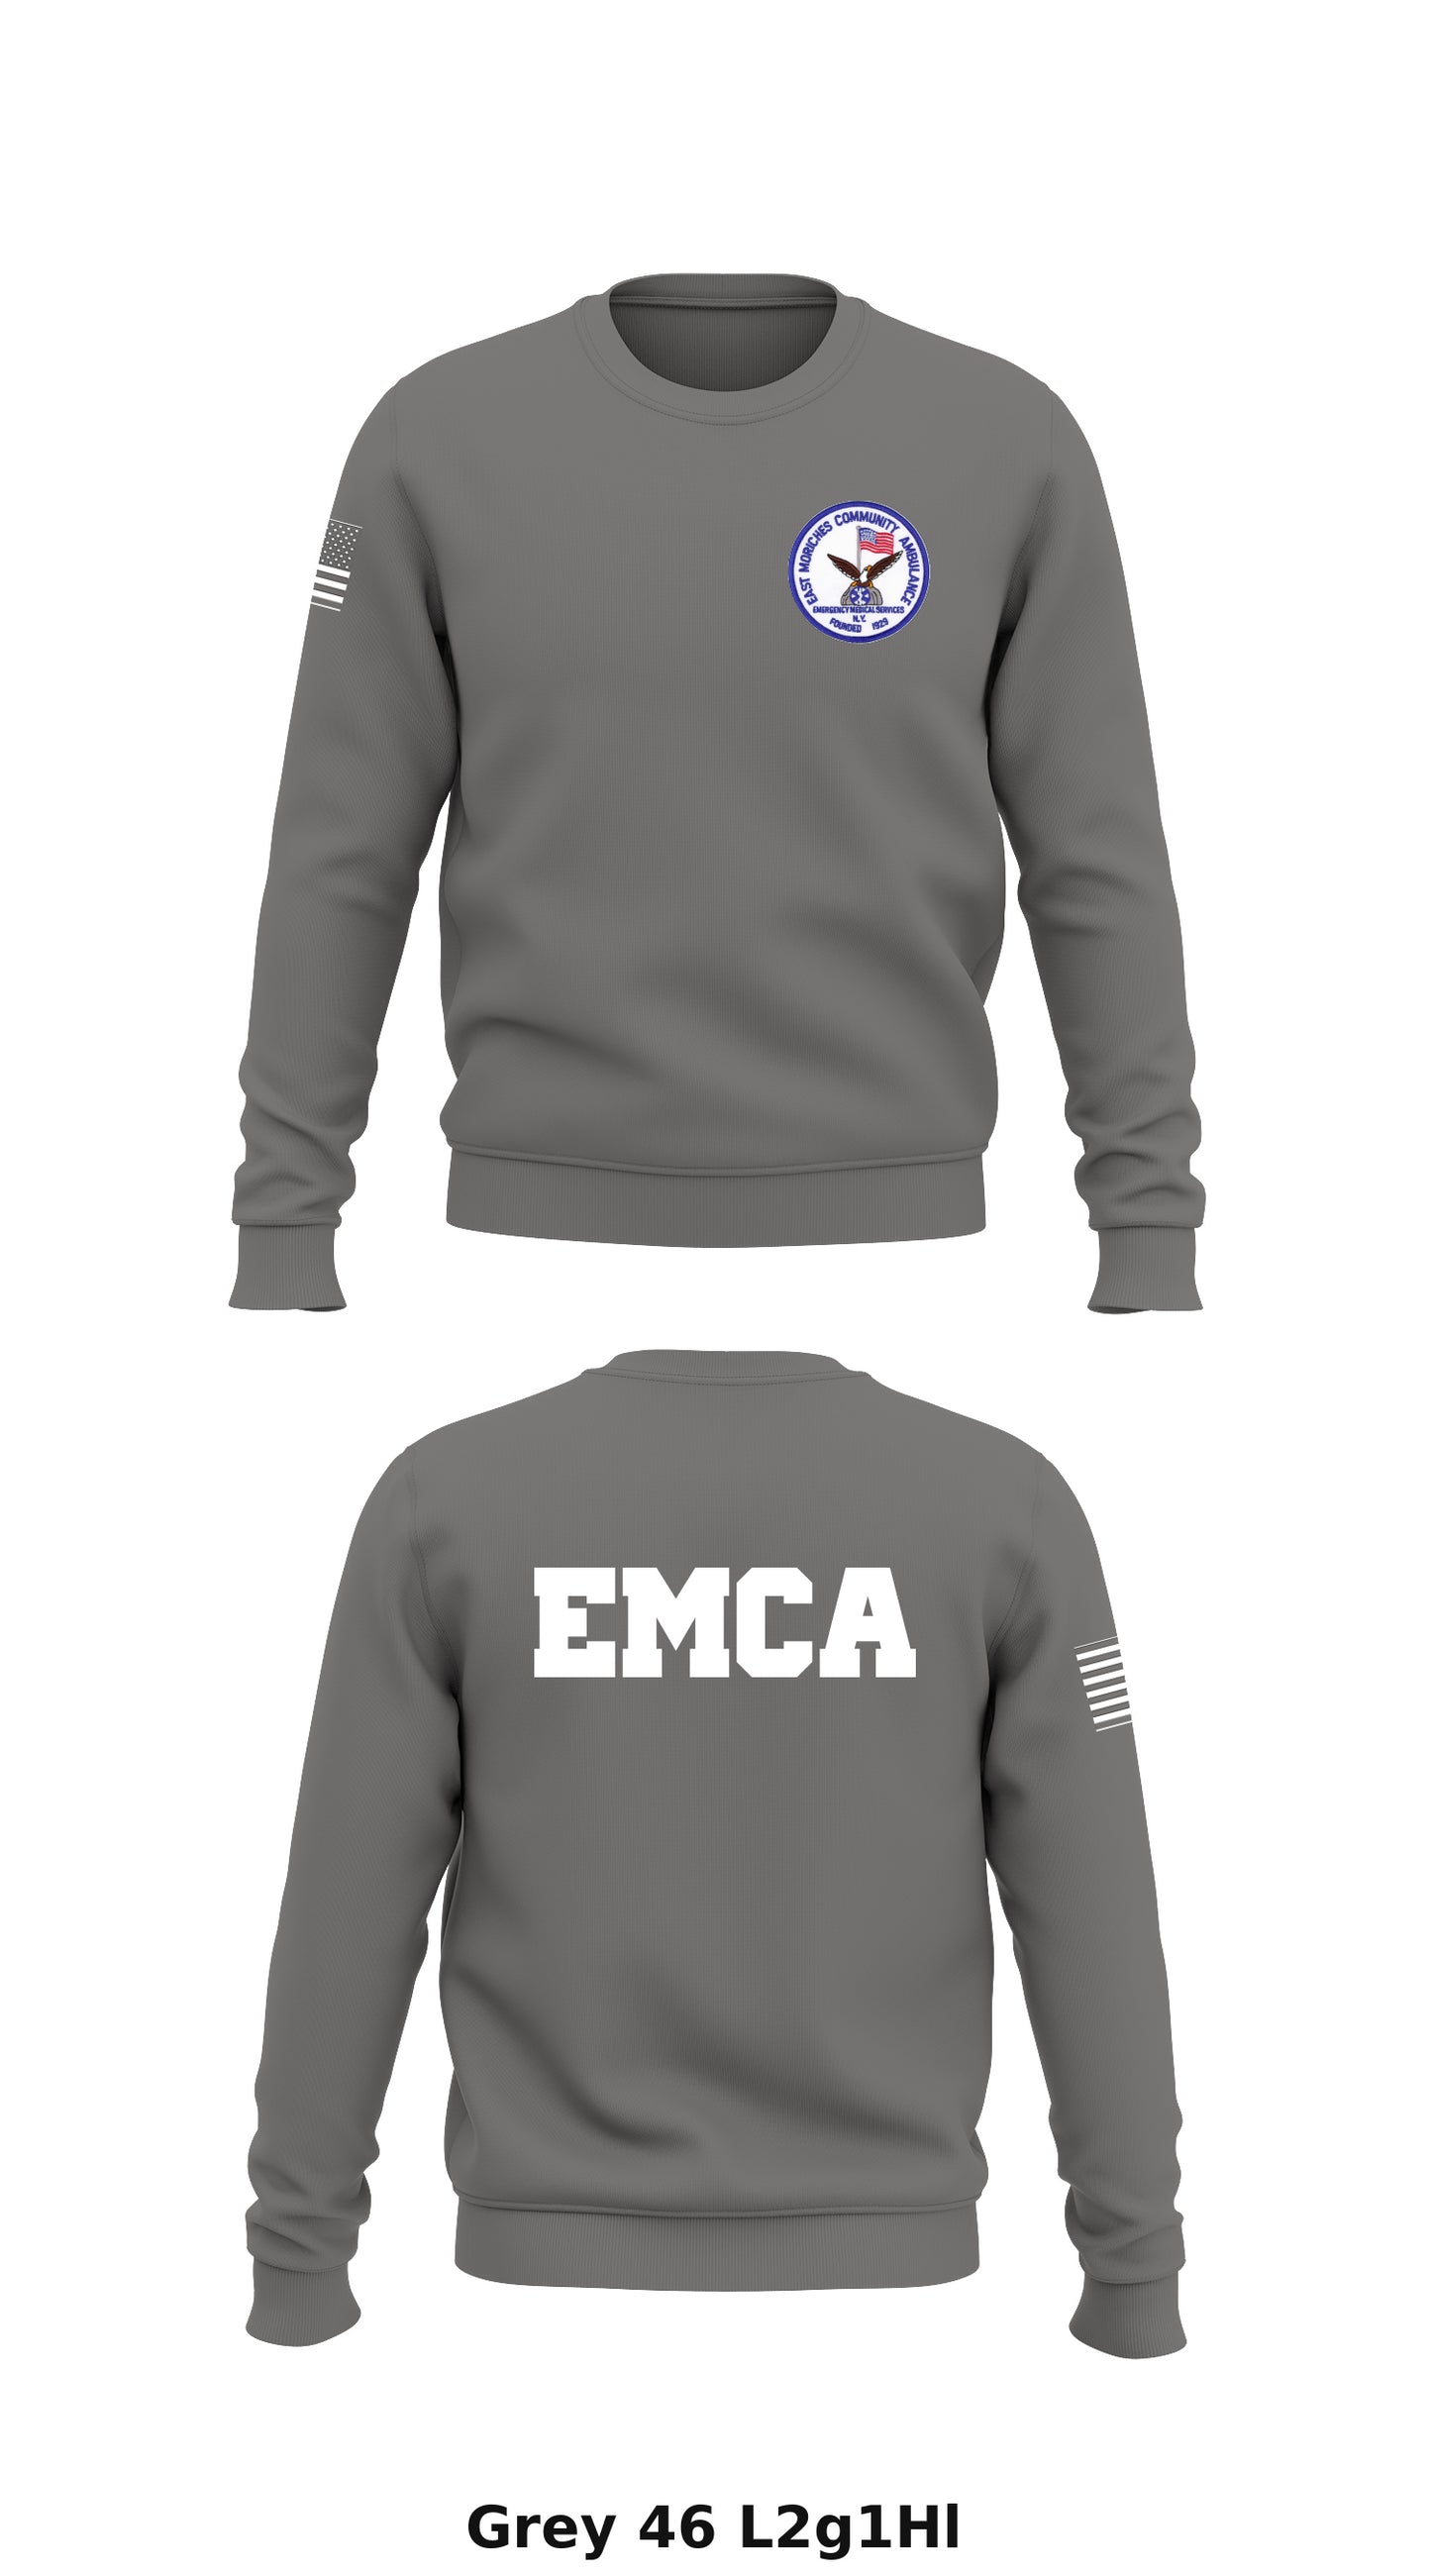 EMCA Store 1 Core Men's Crewneck Performance Sweatshirt - L2g1Hl